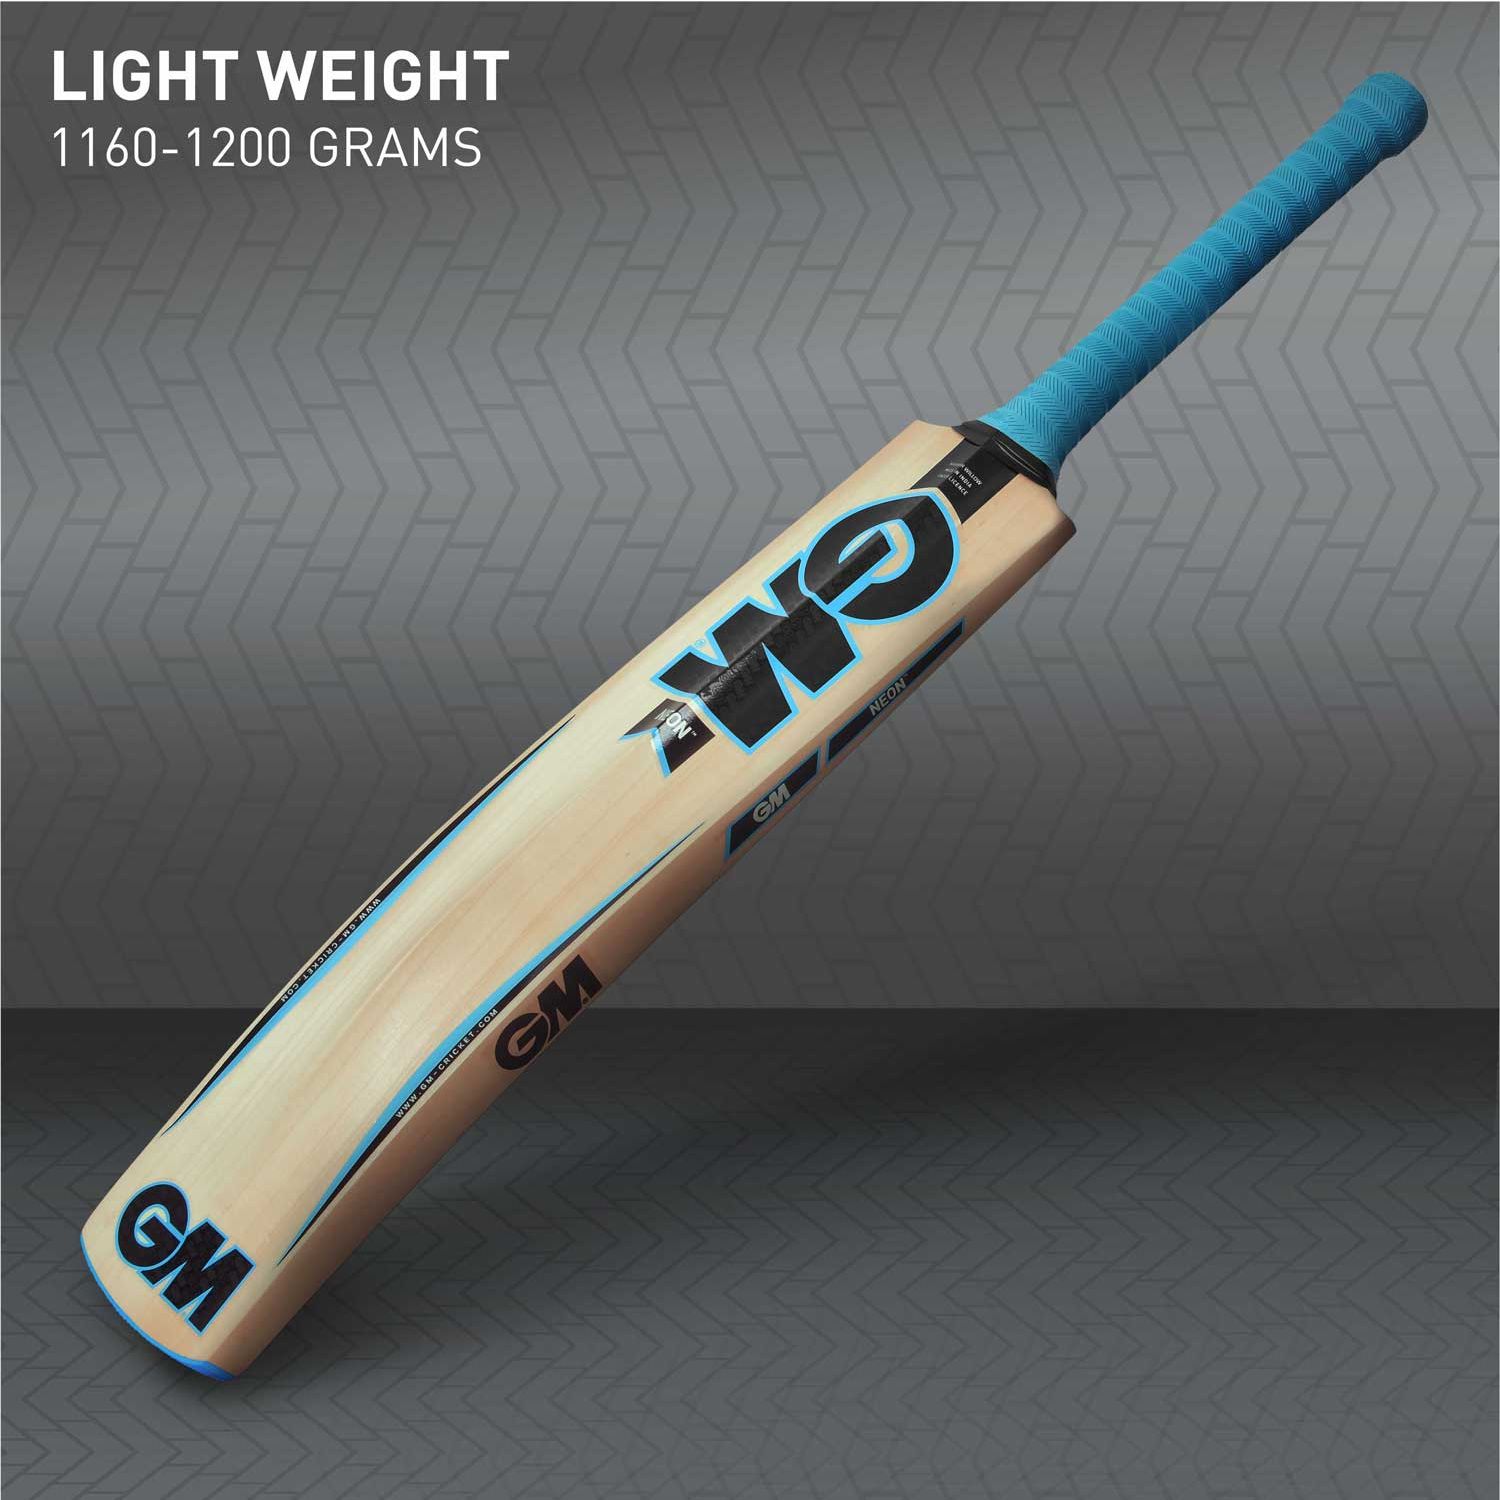 Neon Select Kashmir Willow Cricket Bat